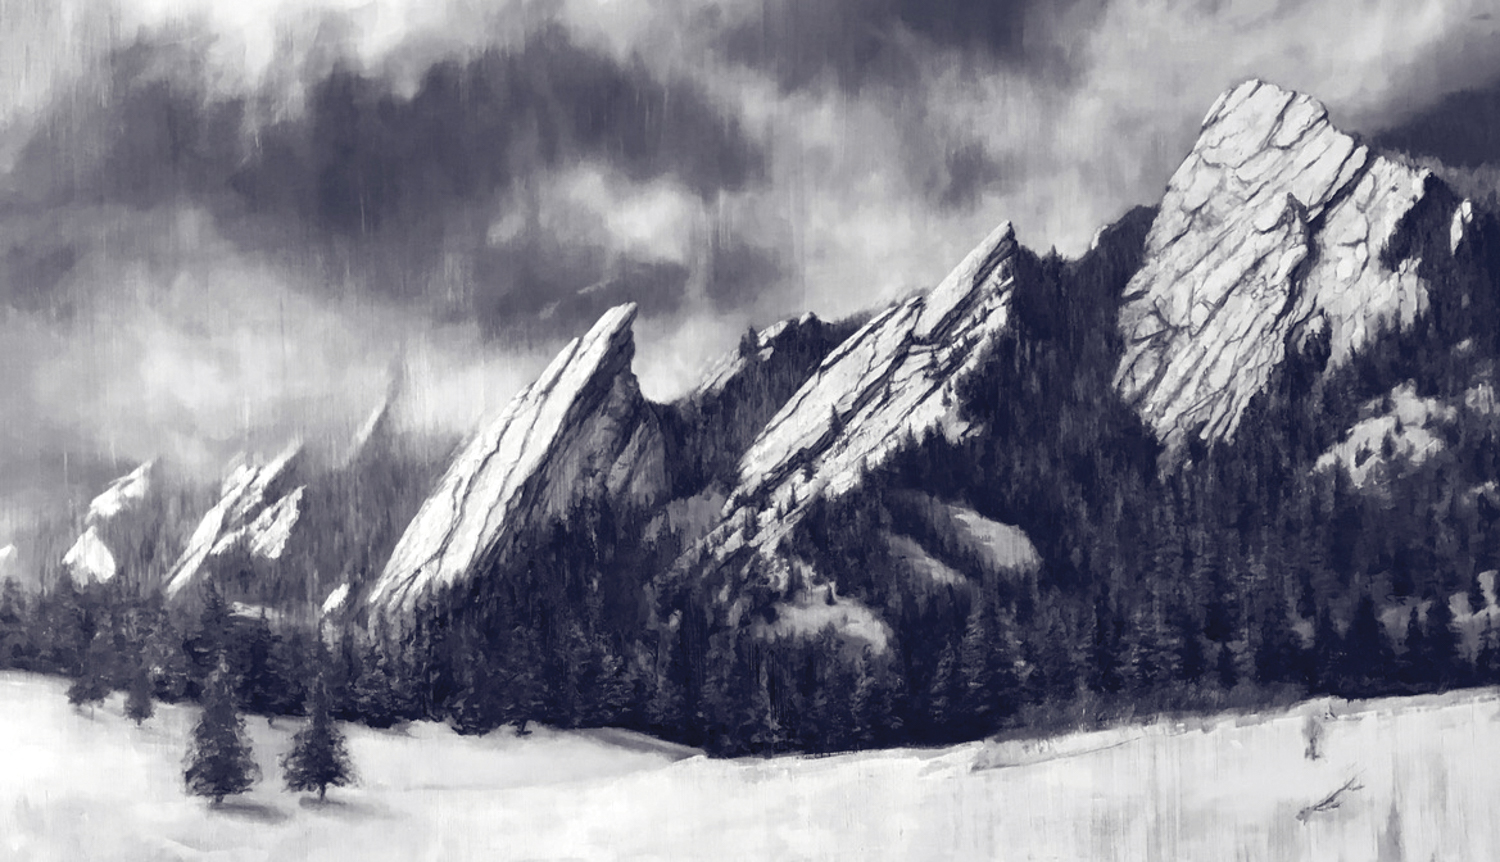 Painting of snowy mountain peaks by Jared Hankins